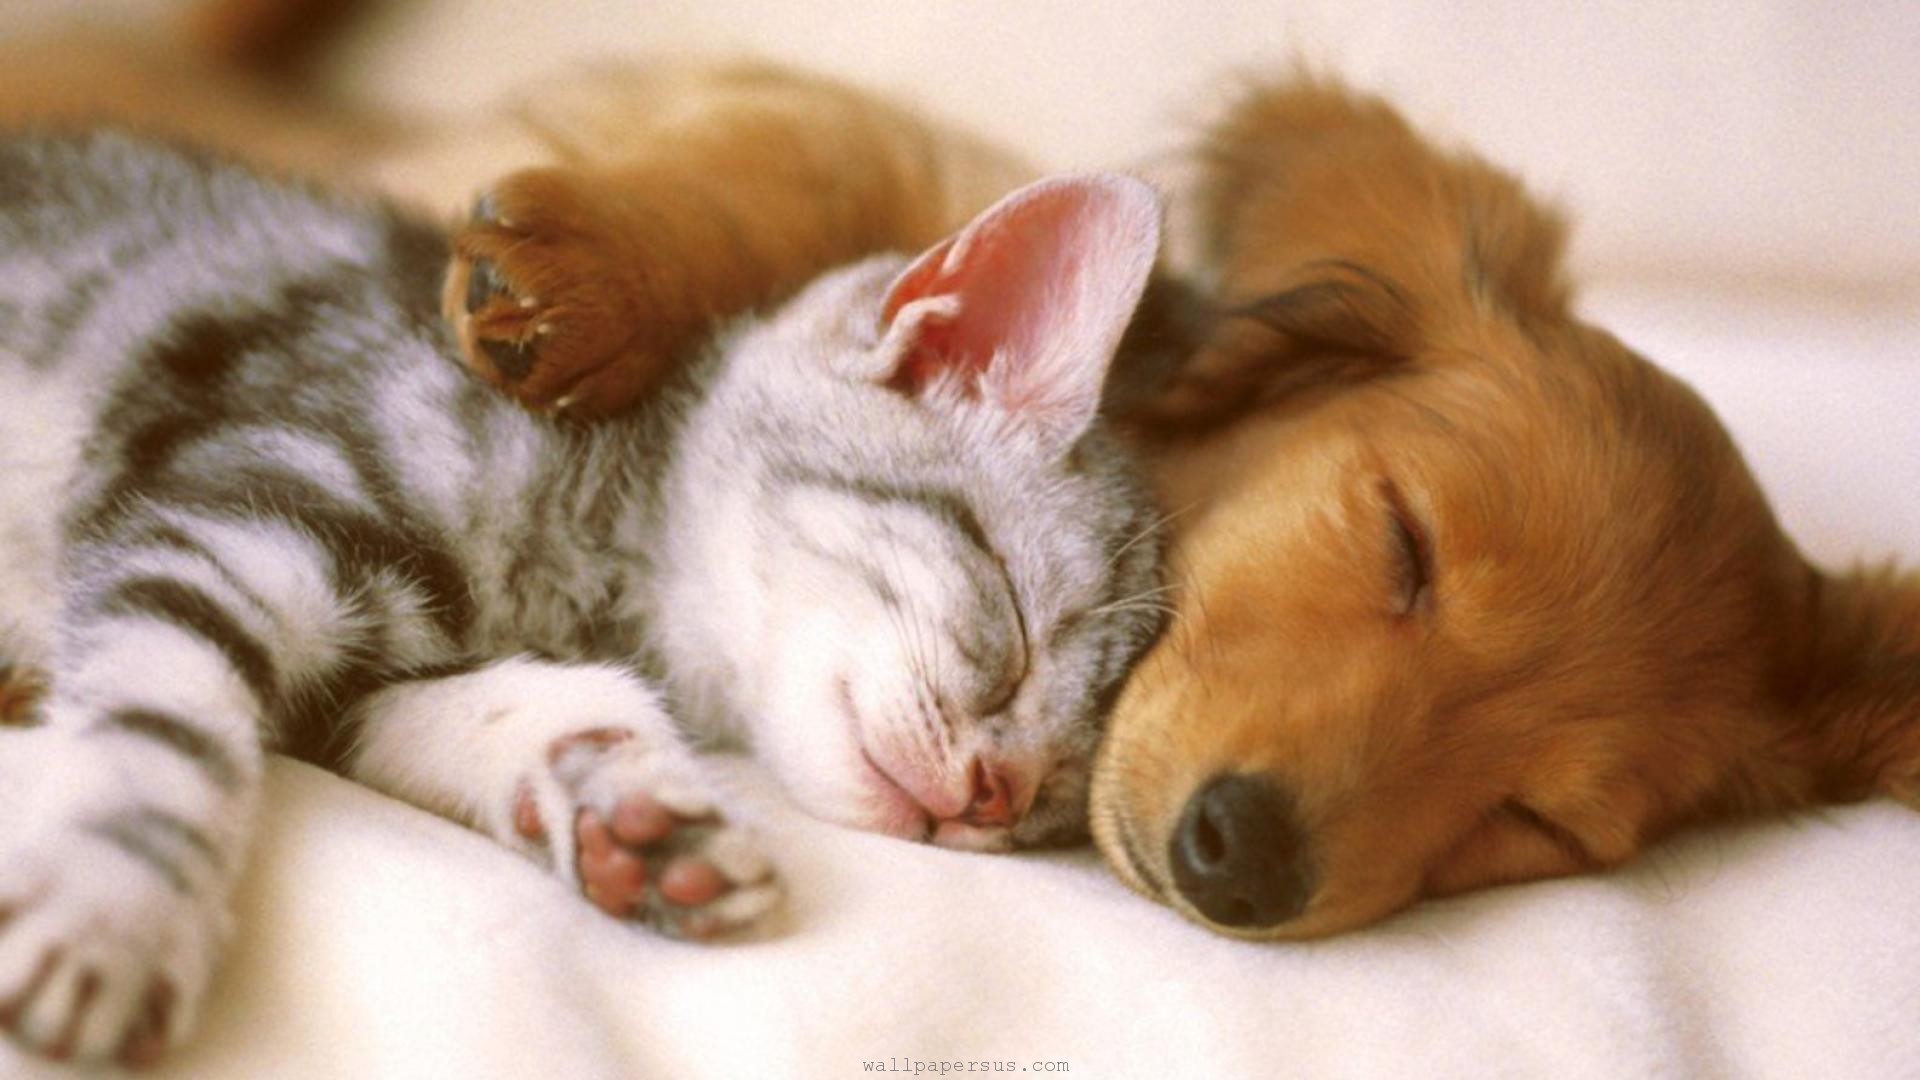 Wallpapers Kittens Puppy Tight Cuddling Friends Kitten Sleeping Us ...